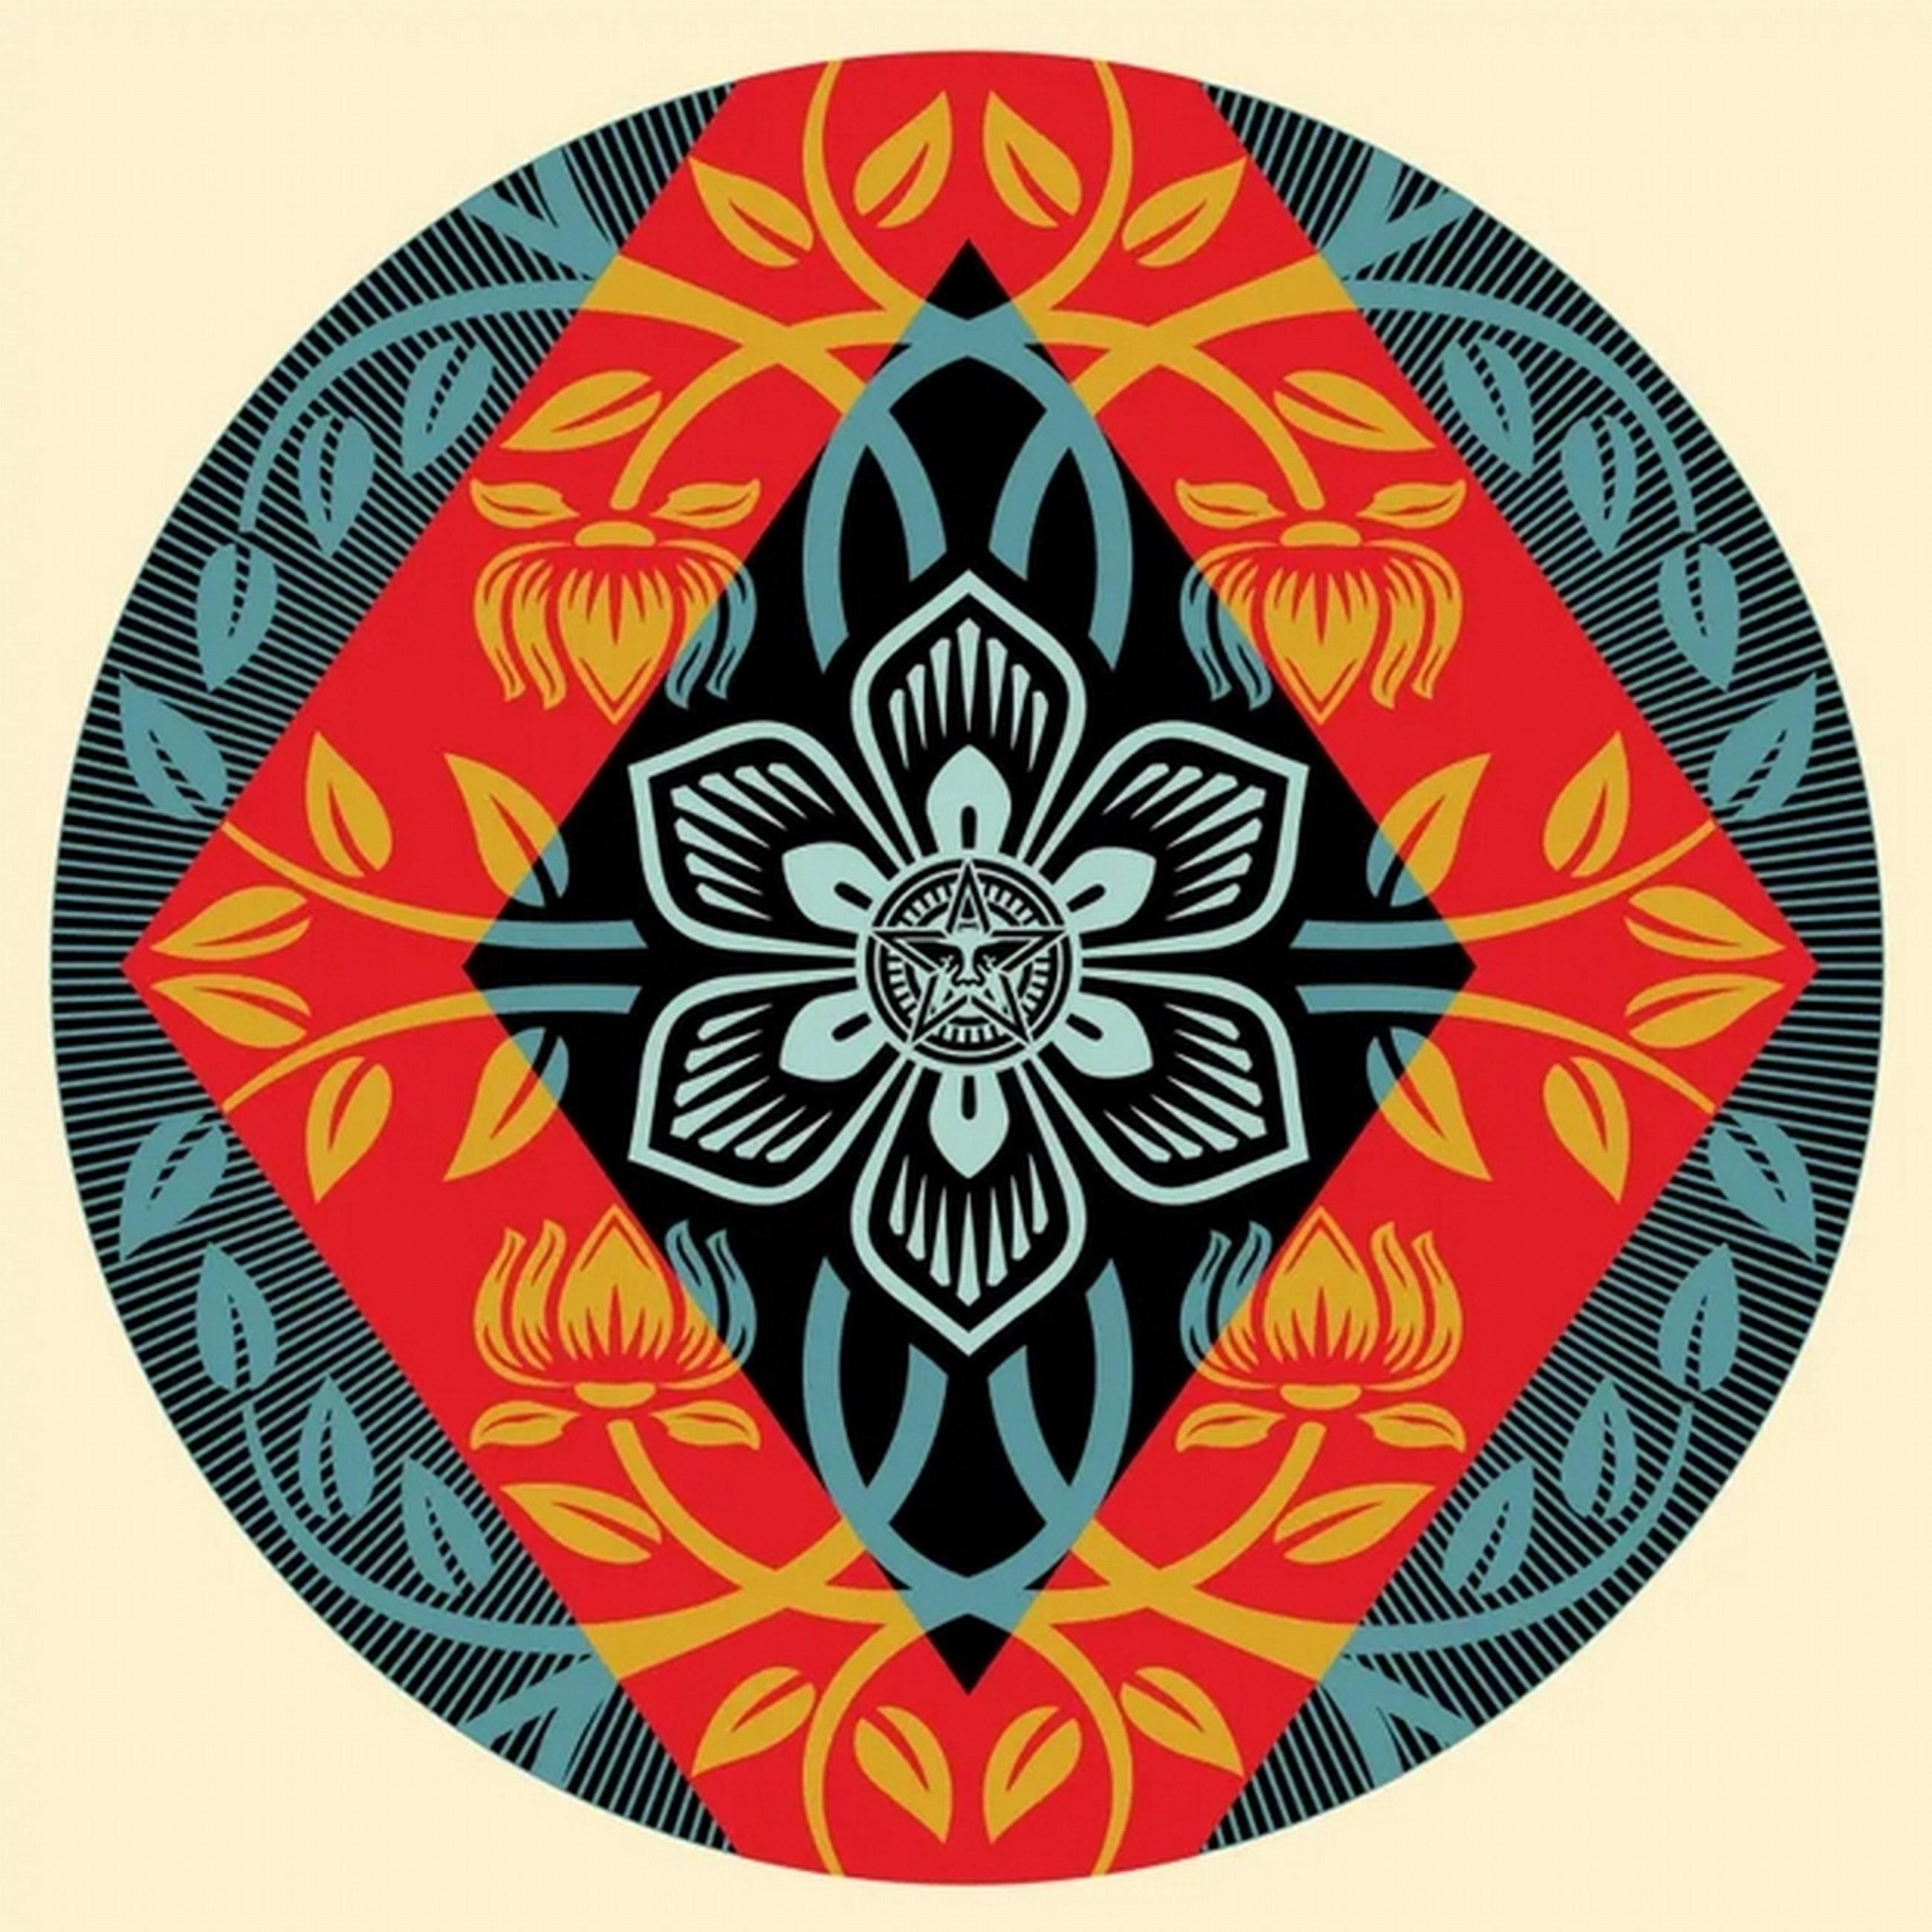 Diamond Flower Round (Iconic, Positive Growth, Harmony, Balance) - Print by Shepard Fairey